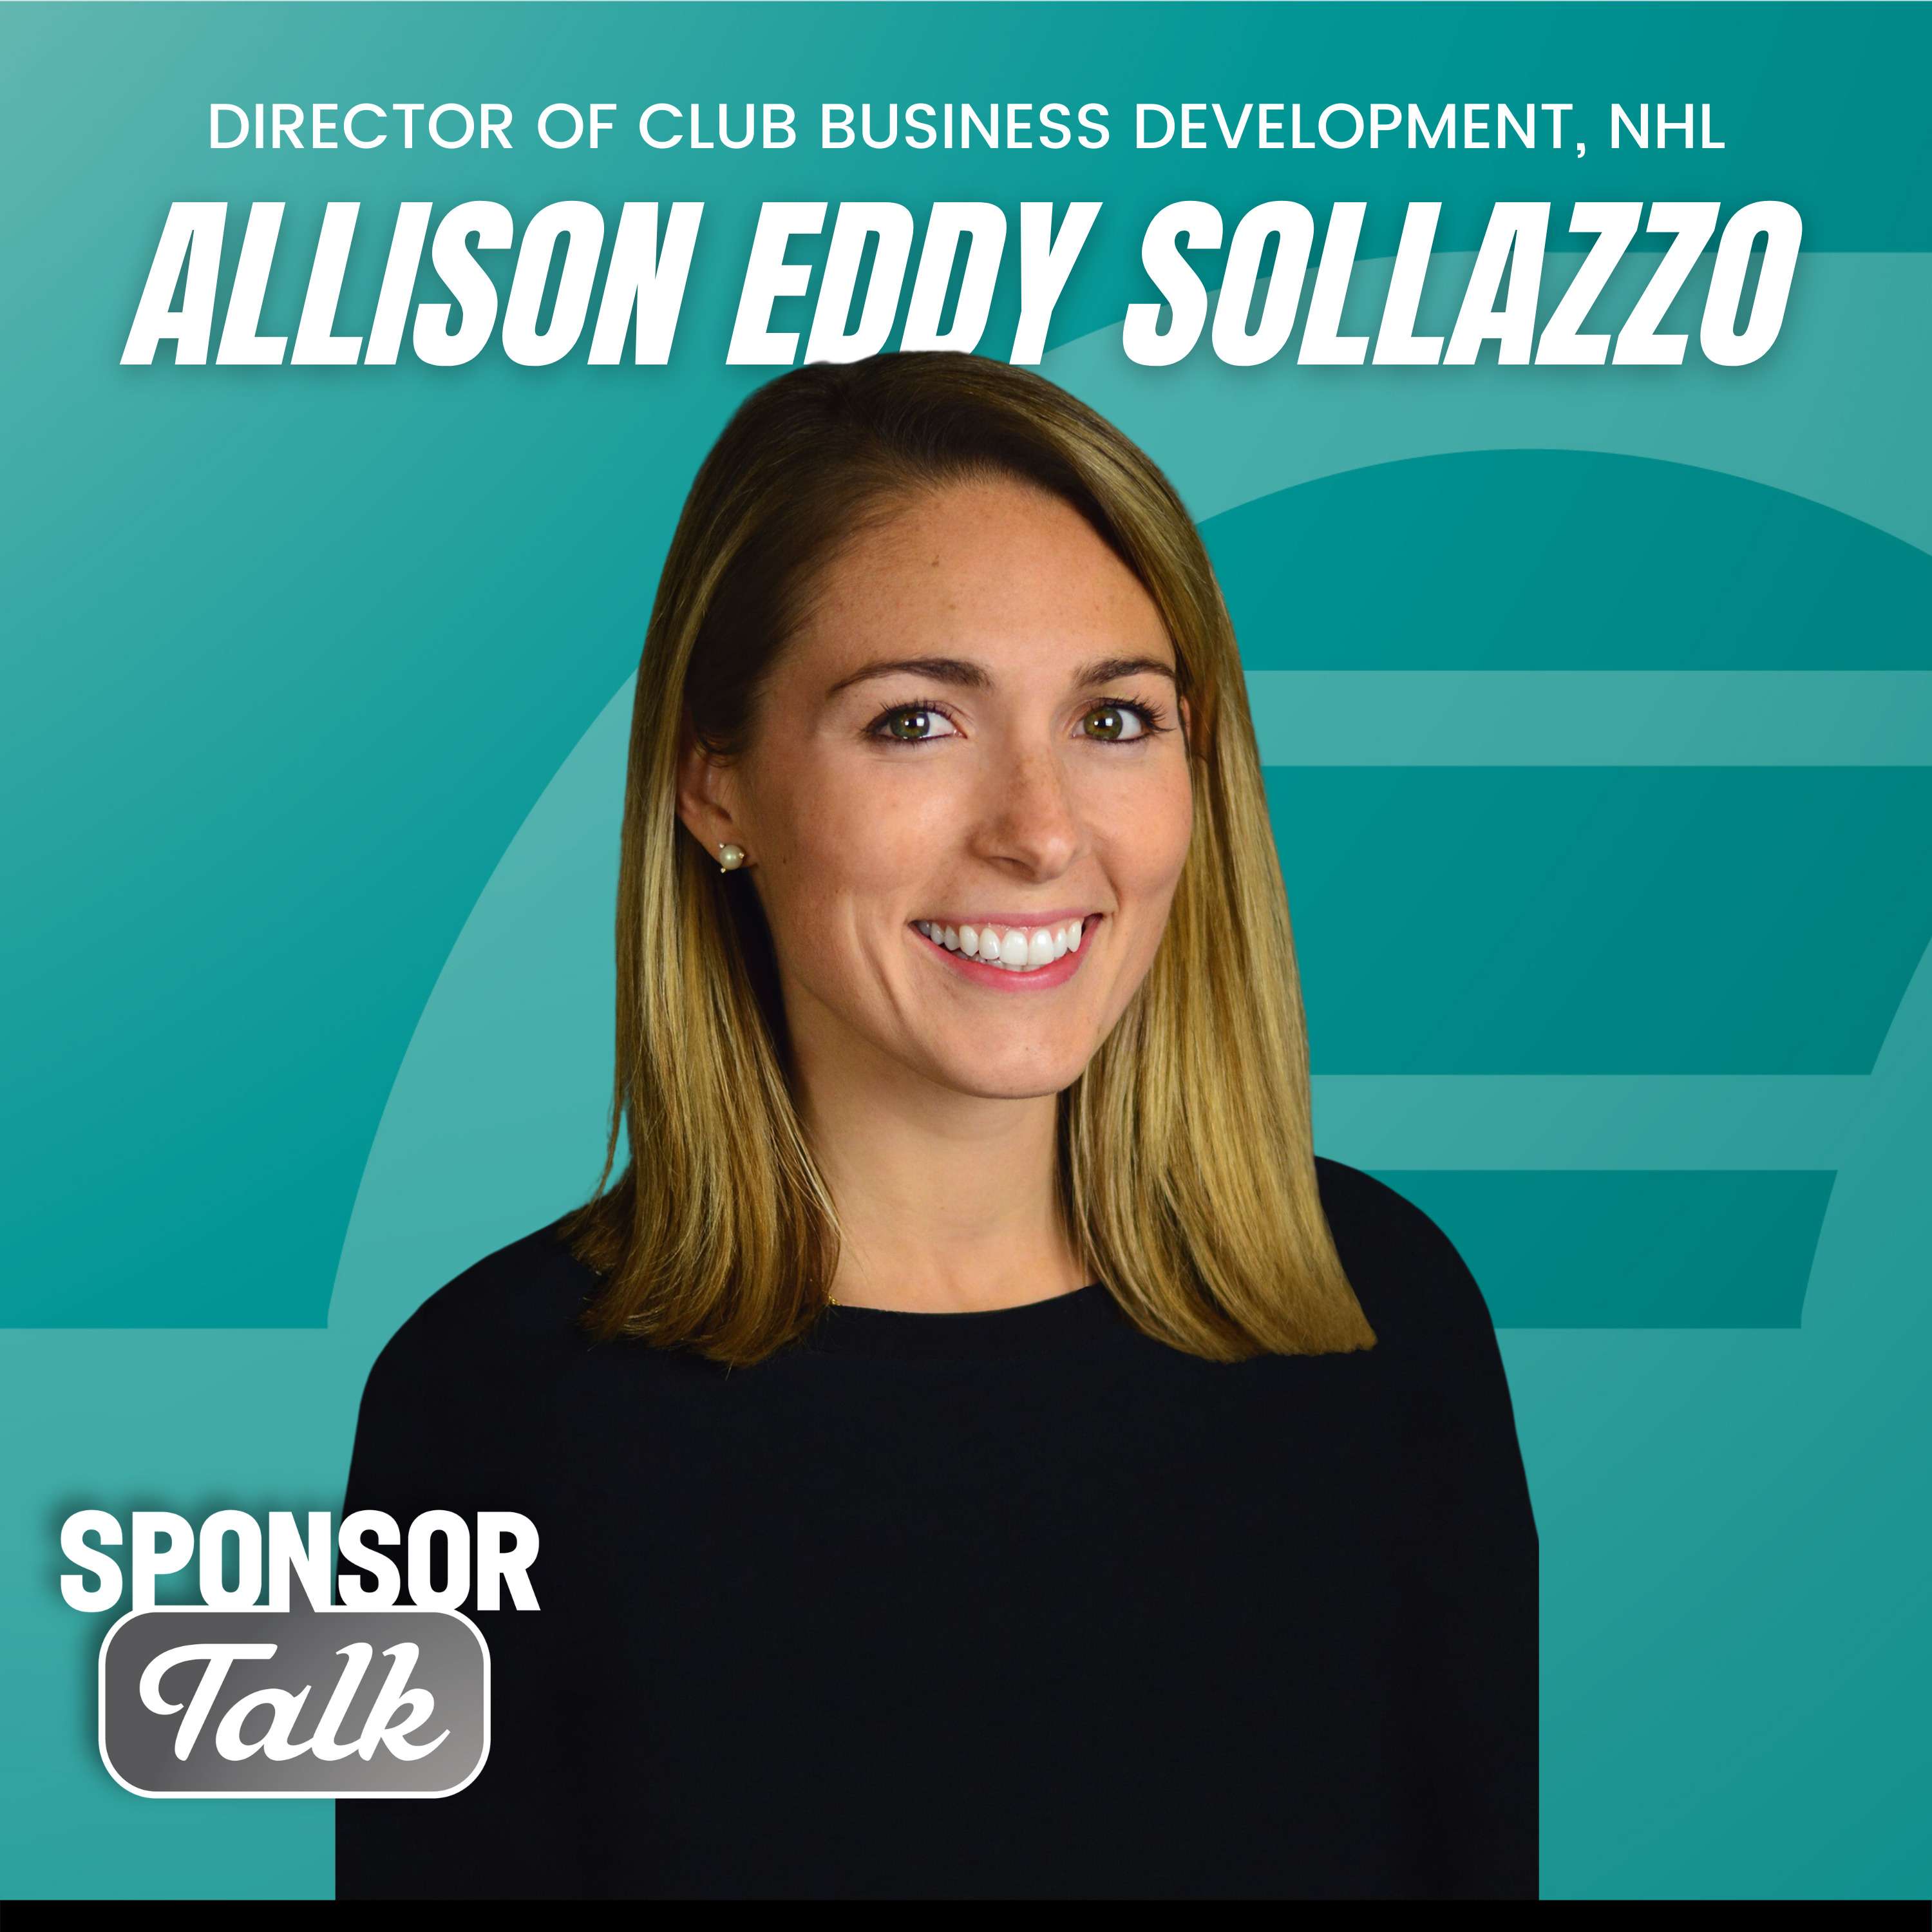 Allison Eddy Sollazzo | Director of Club Business Development, NHL